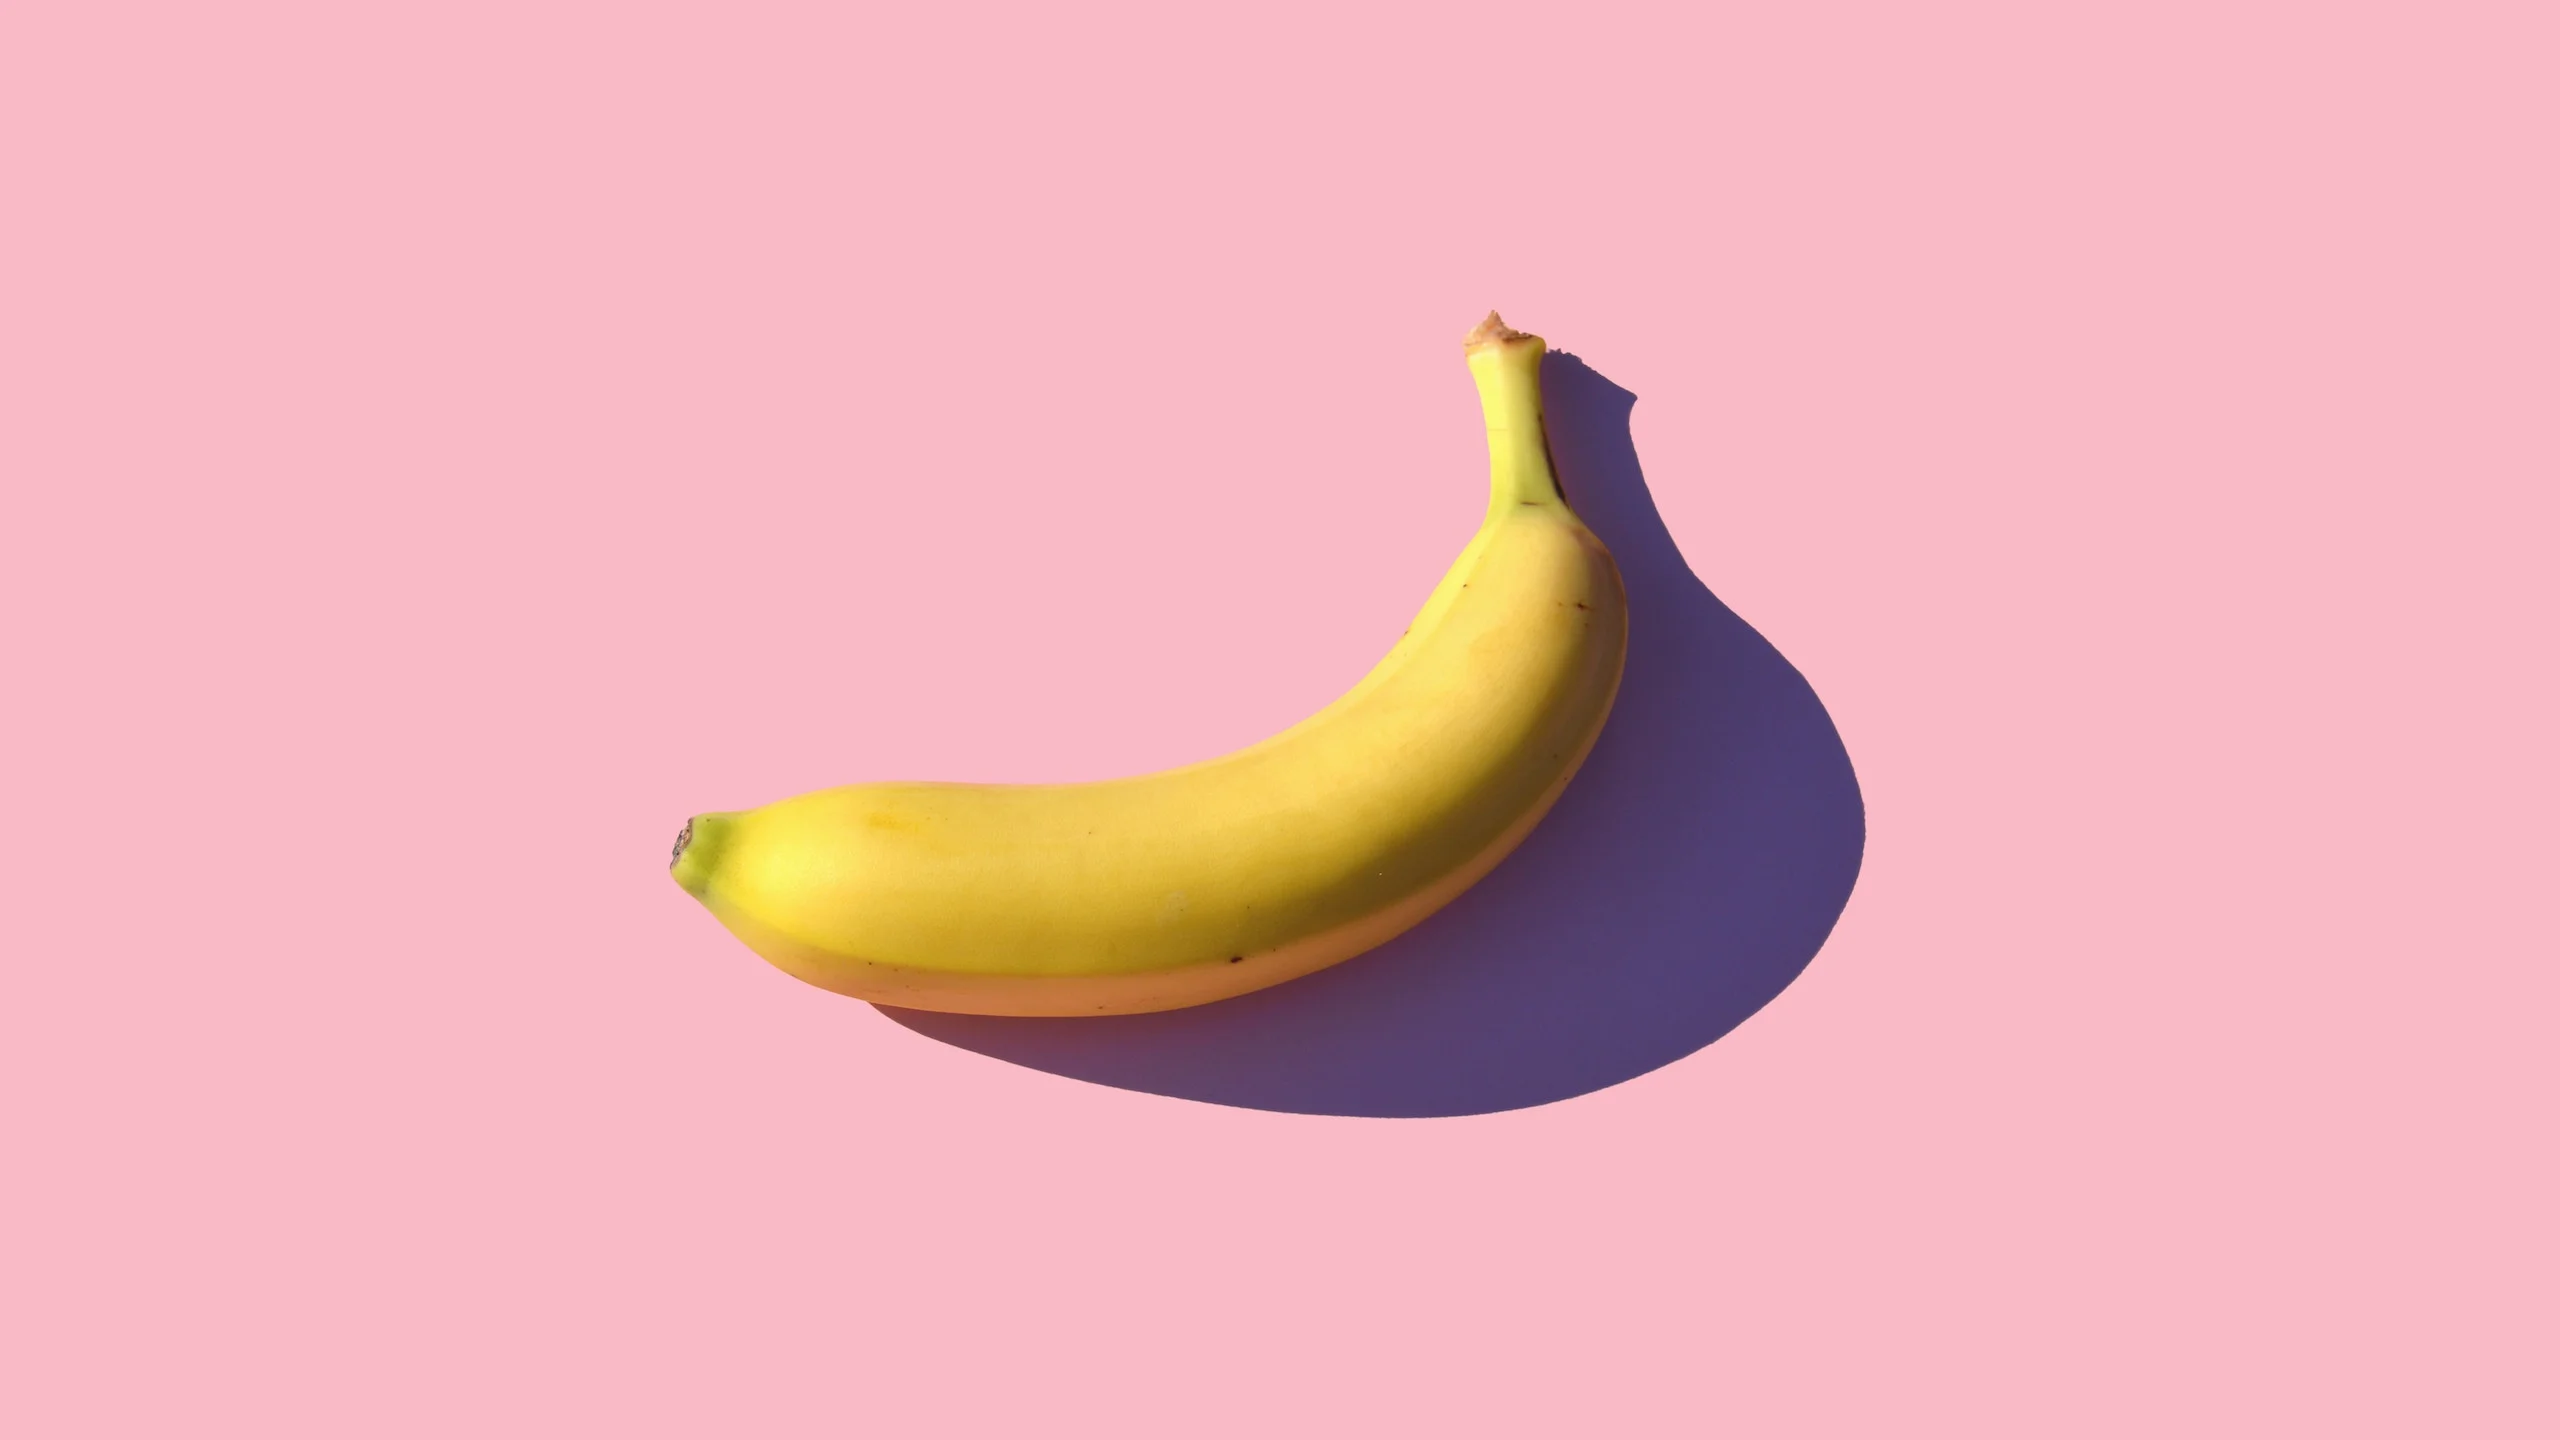 ¿Usarás plátano en tus postres? Mételo al microondas